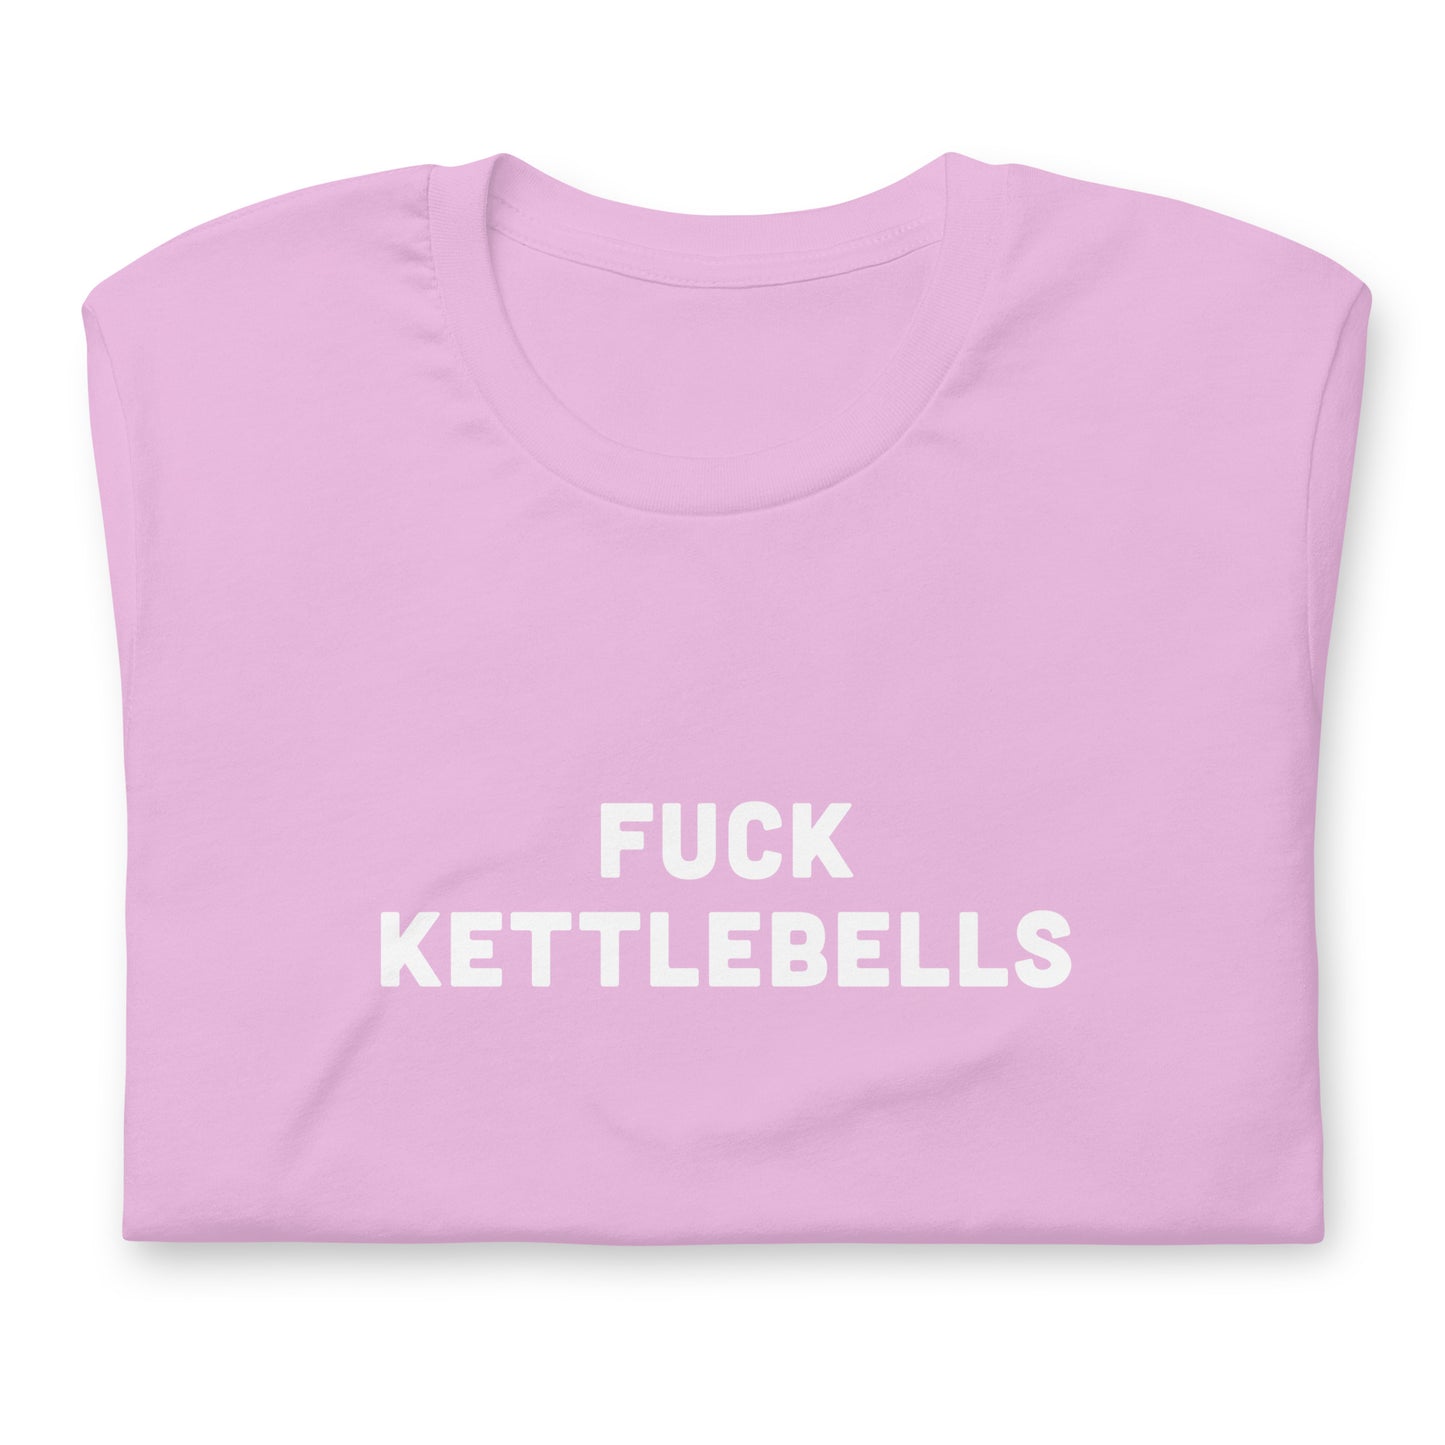 Fuck Kettlebells T-Shirt Size 2XL Color Forest